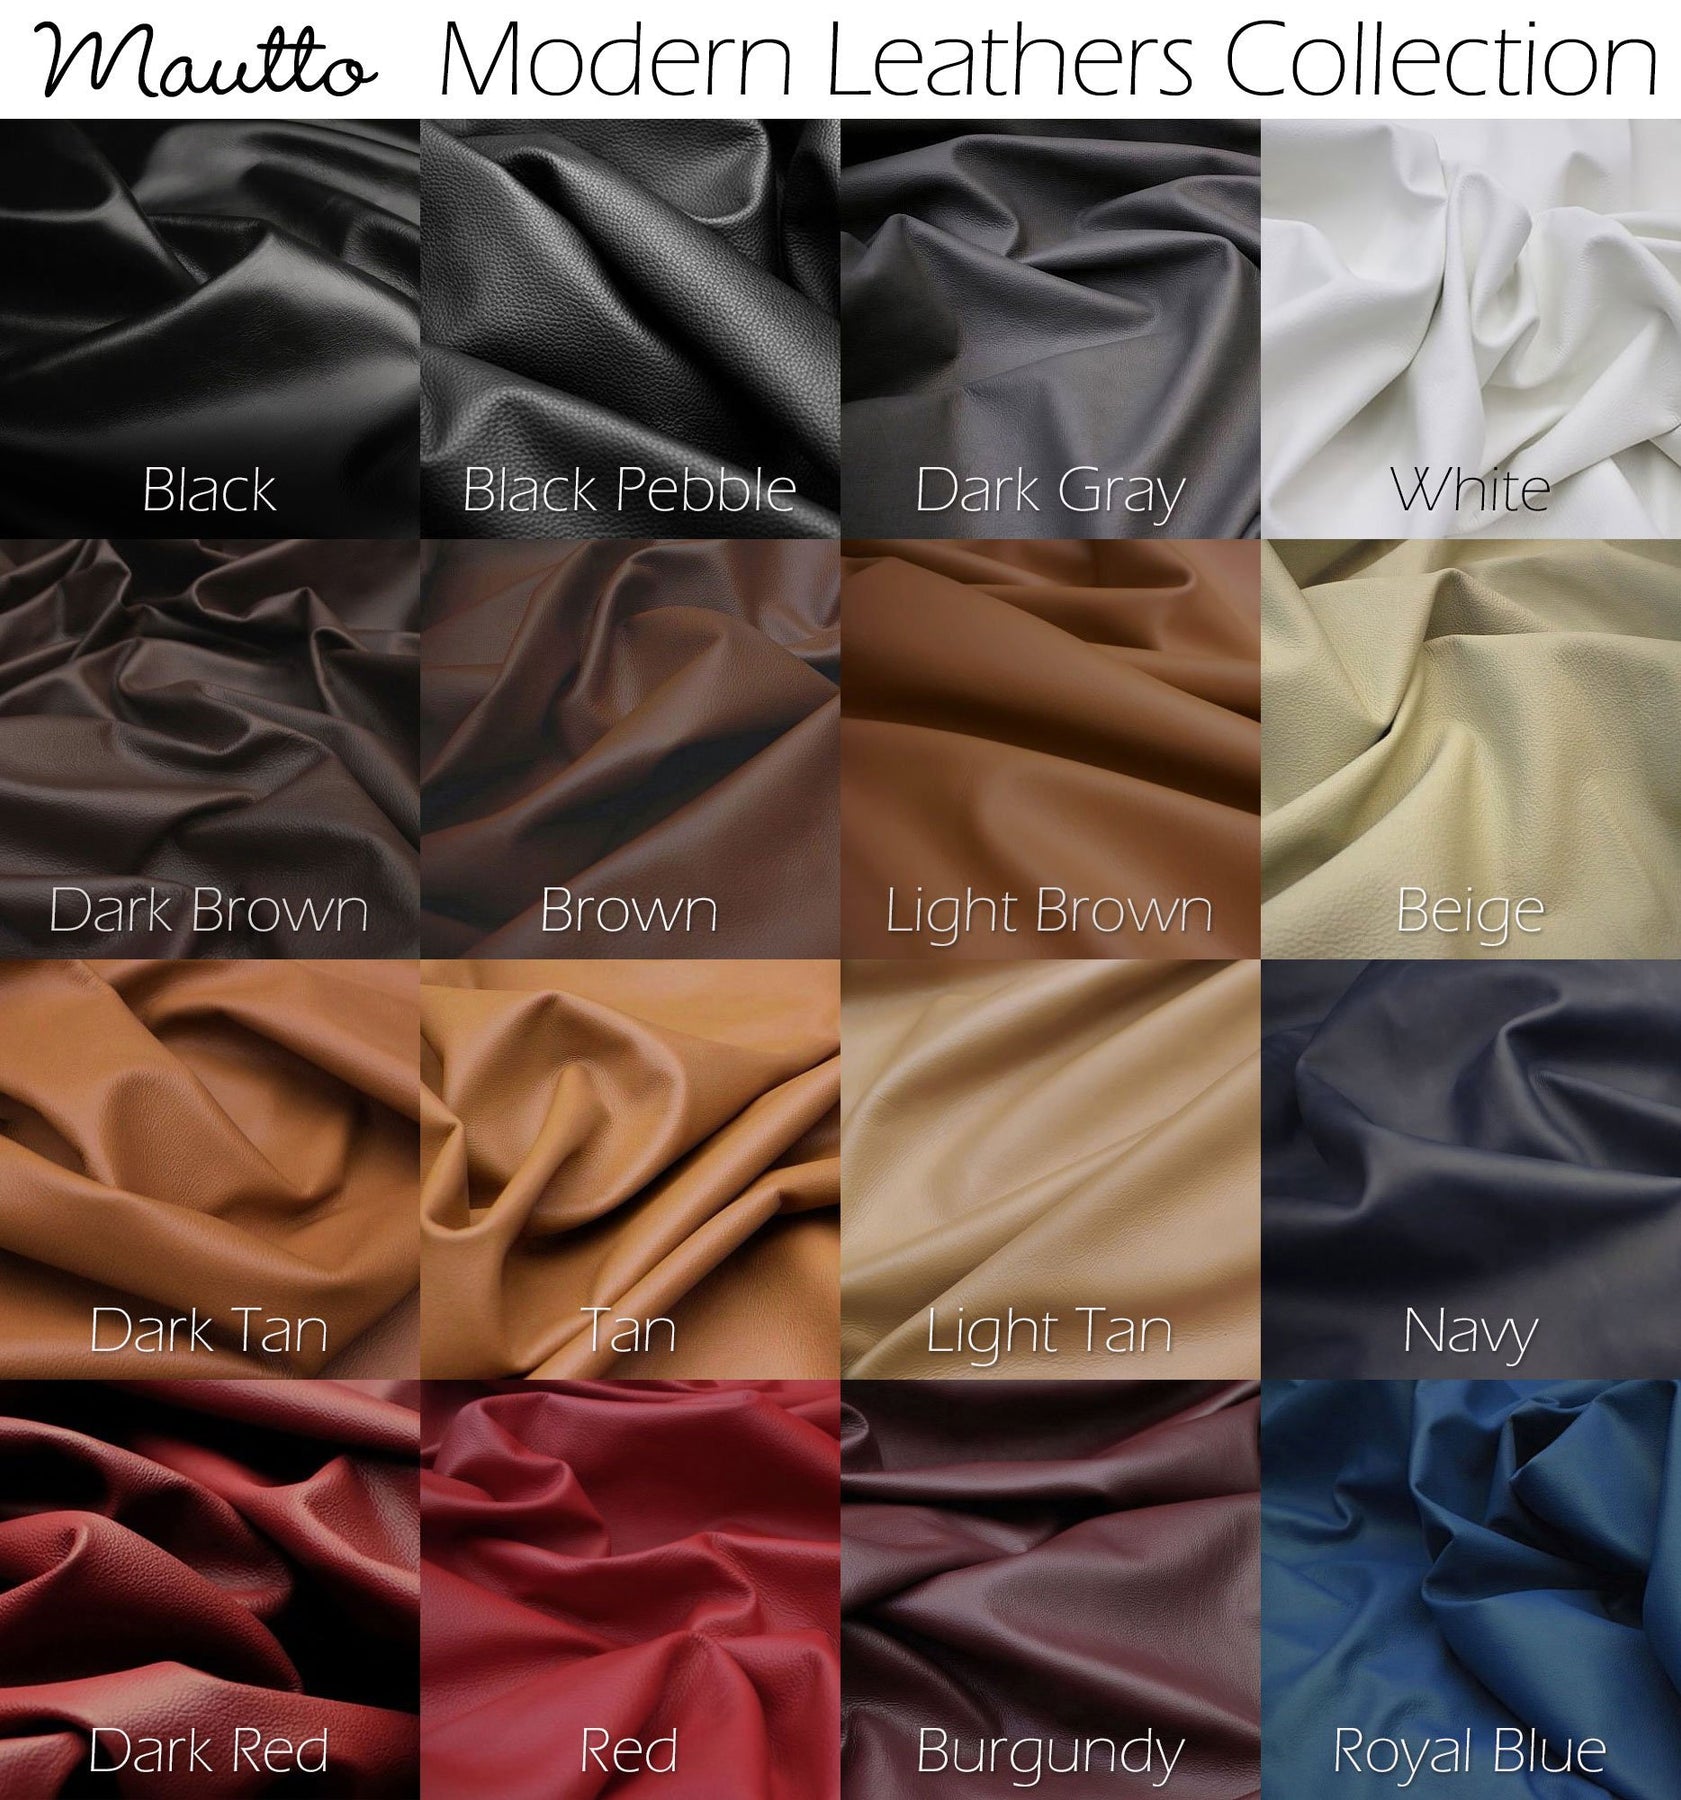 Adjustable Crossbody Bag Strap - Choose Leather Color - 55 Maximum Length,  3/4 Wide, #16 Hooks